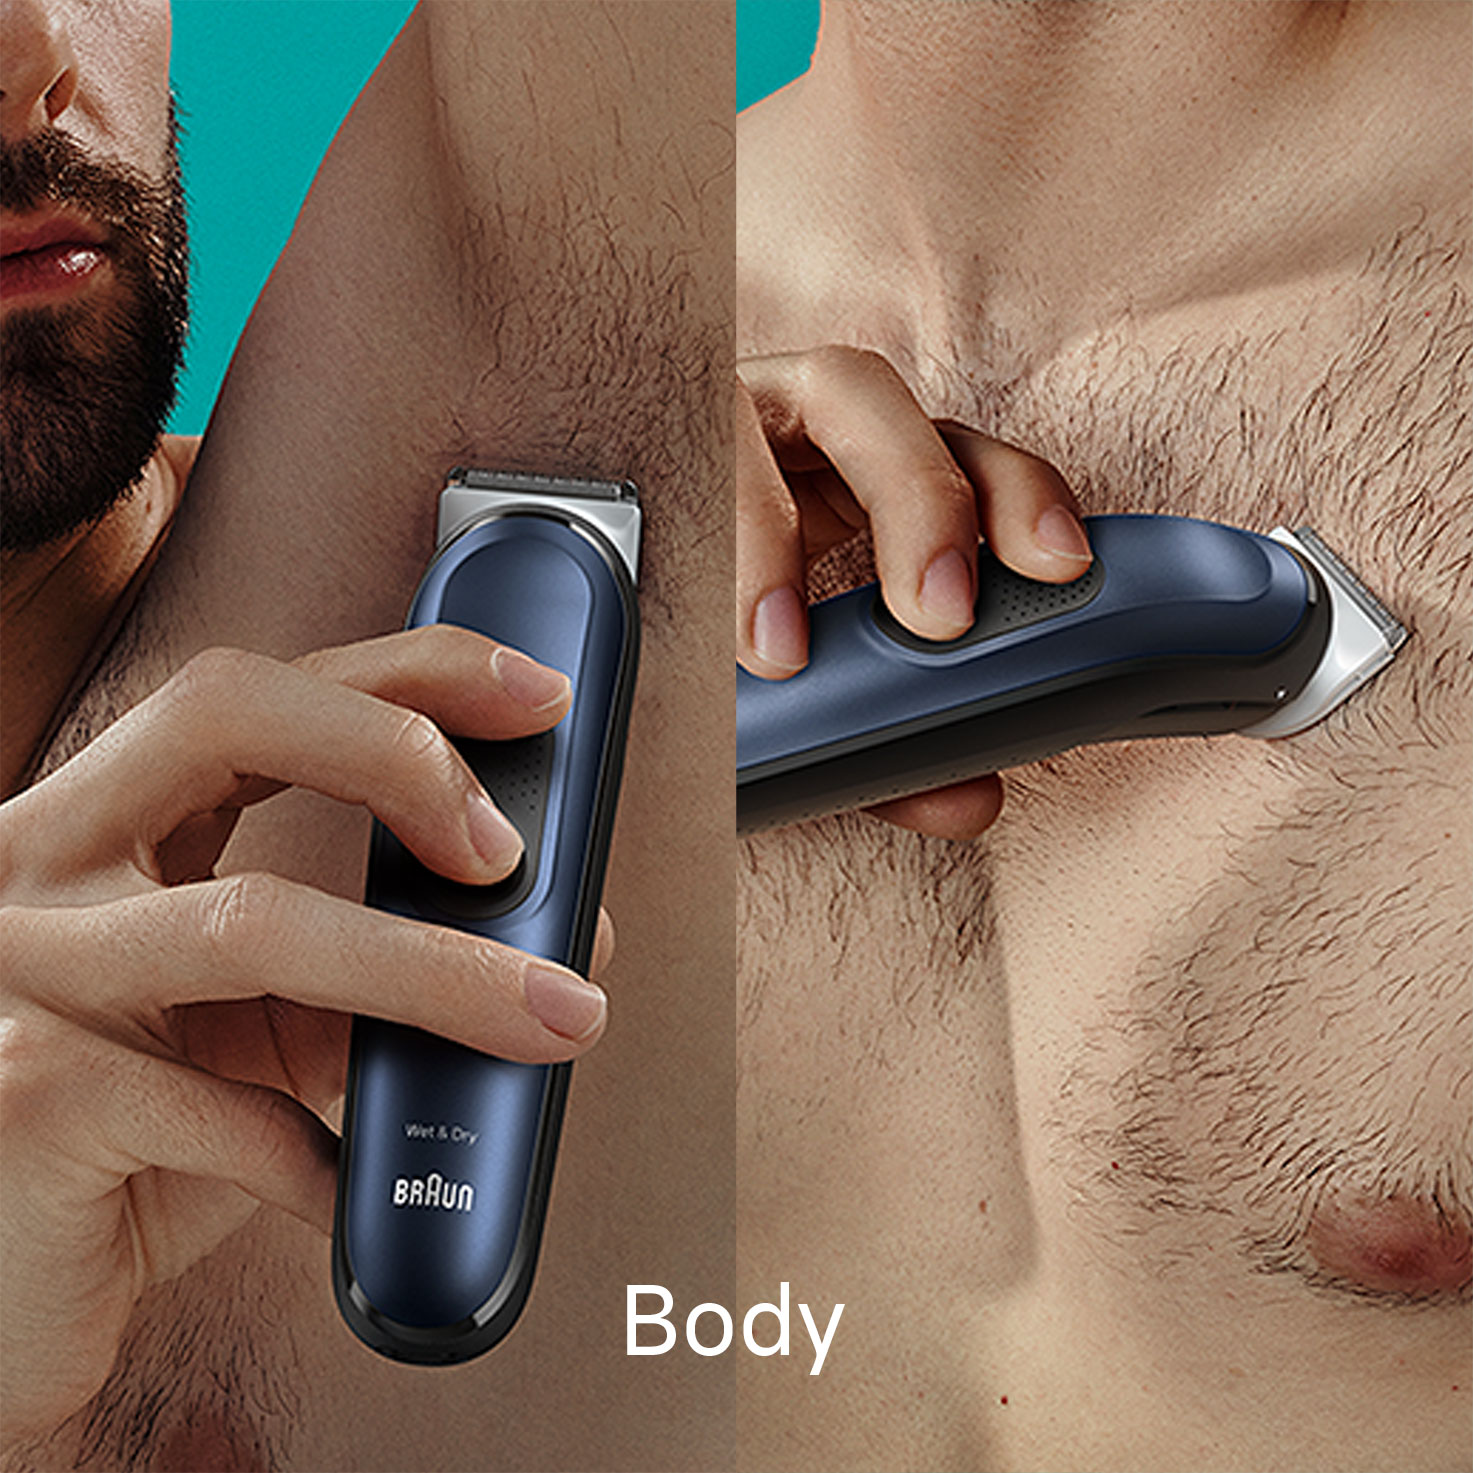 MGK 7410 : Braun\'s all in one male body grooming kit | Braun SG